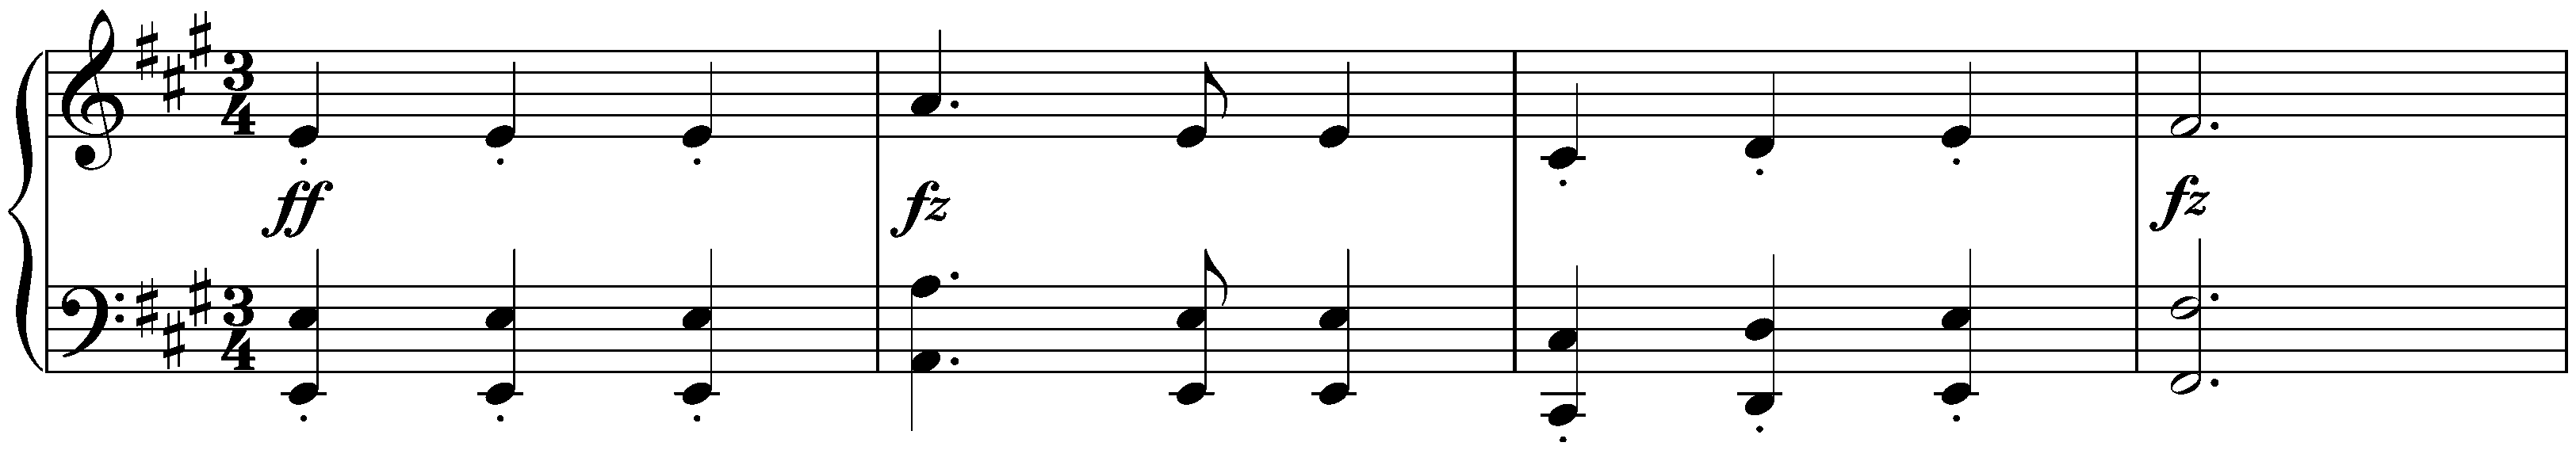 Sixteen deutsche Tänze and two Ecossaises, D 783; 1. Sixteen deutsche Tänze, no. 1 in A major